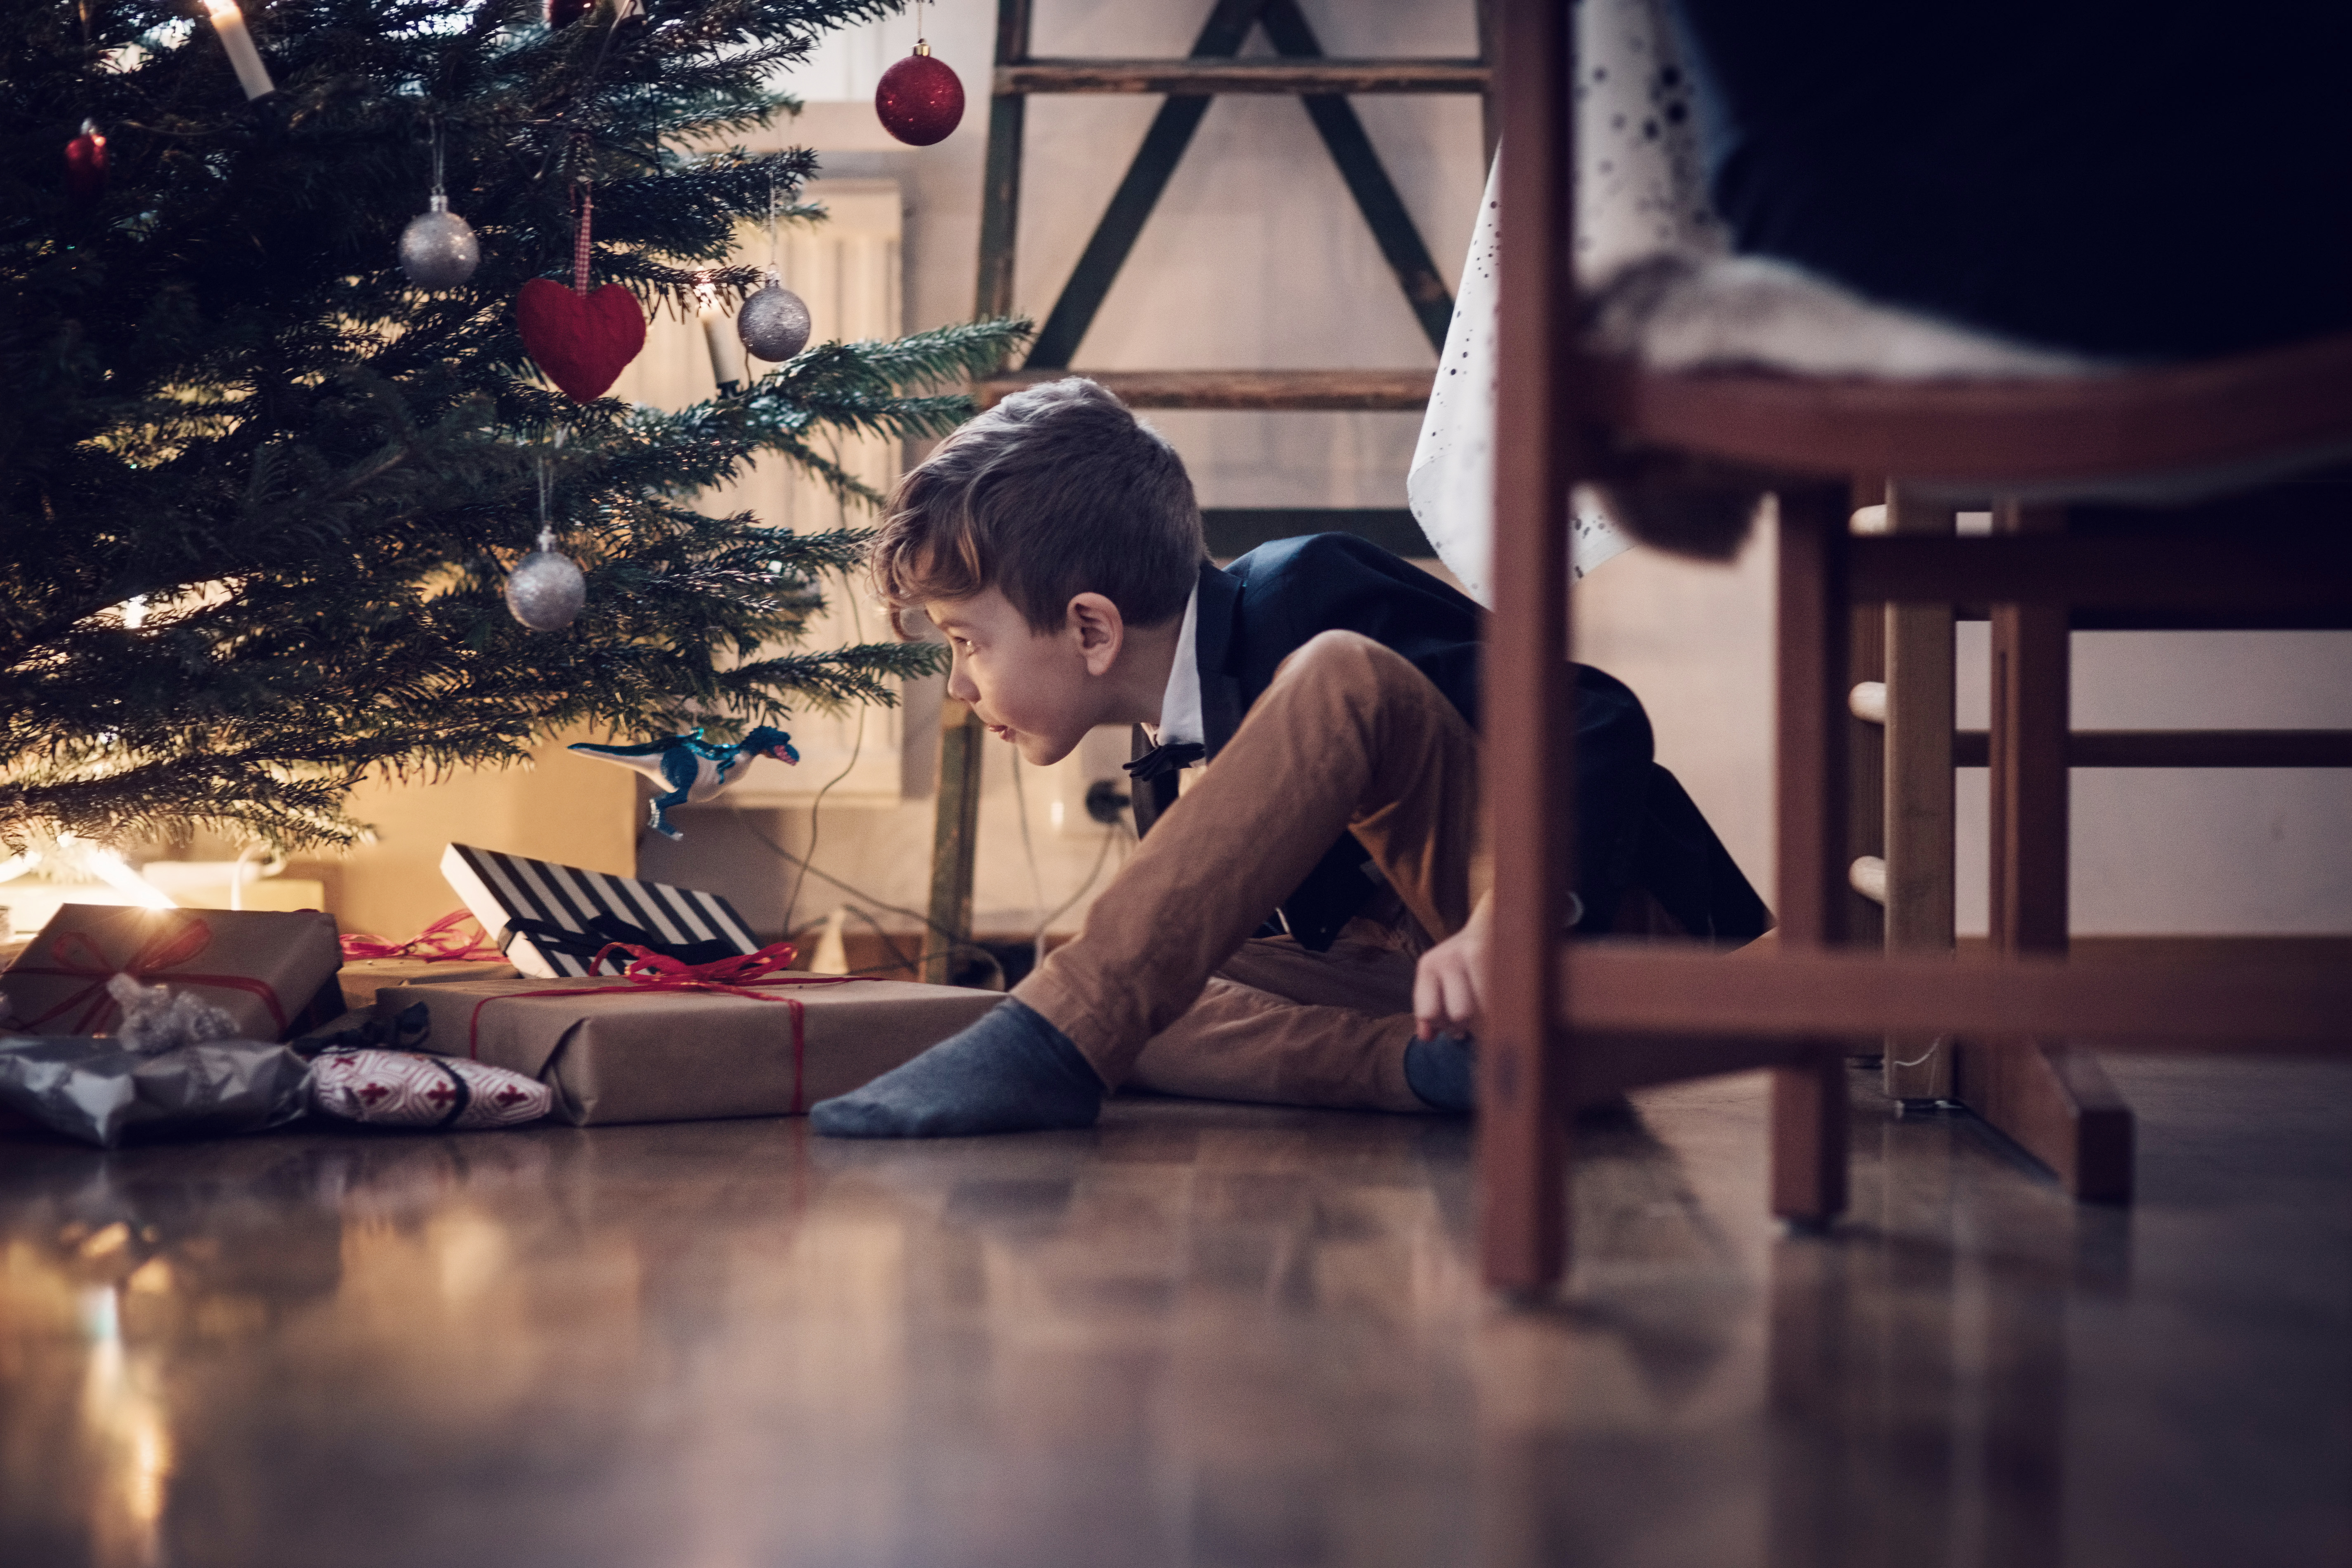 Boy looking at Christmas tree and presents